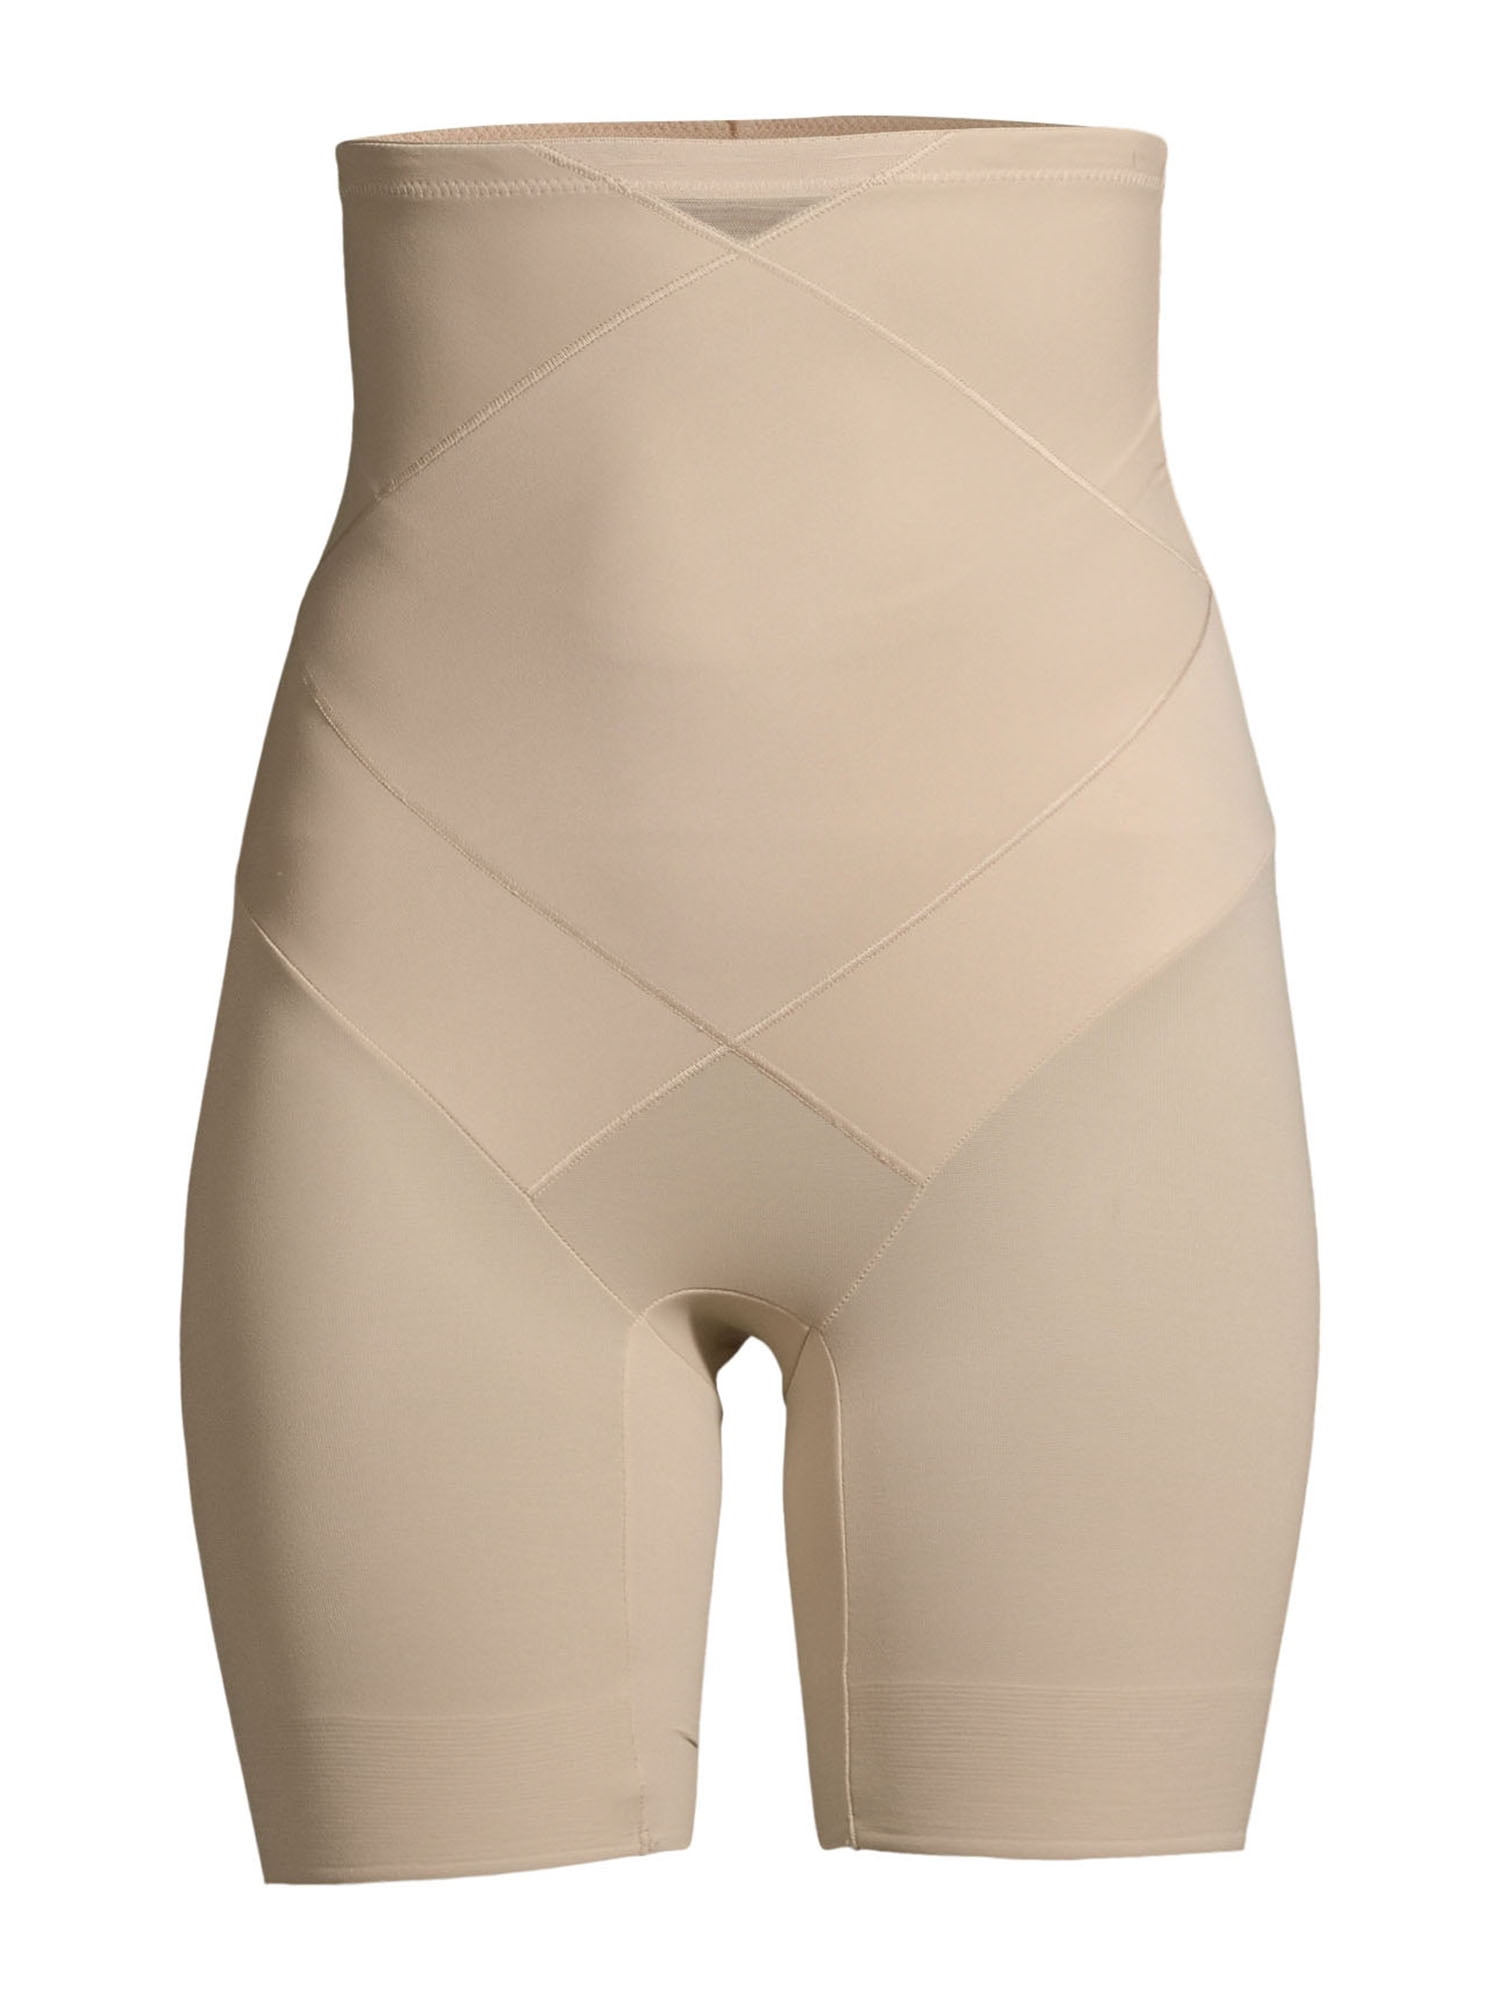 NZSALE  Cupid Shapewear Skin Benefit High Waist Shaper Shorts - Cameo Rose